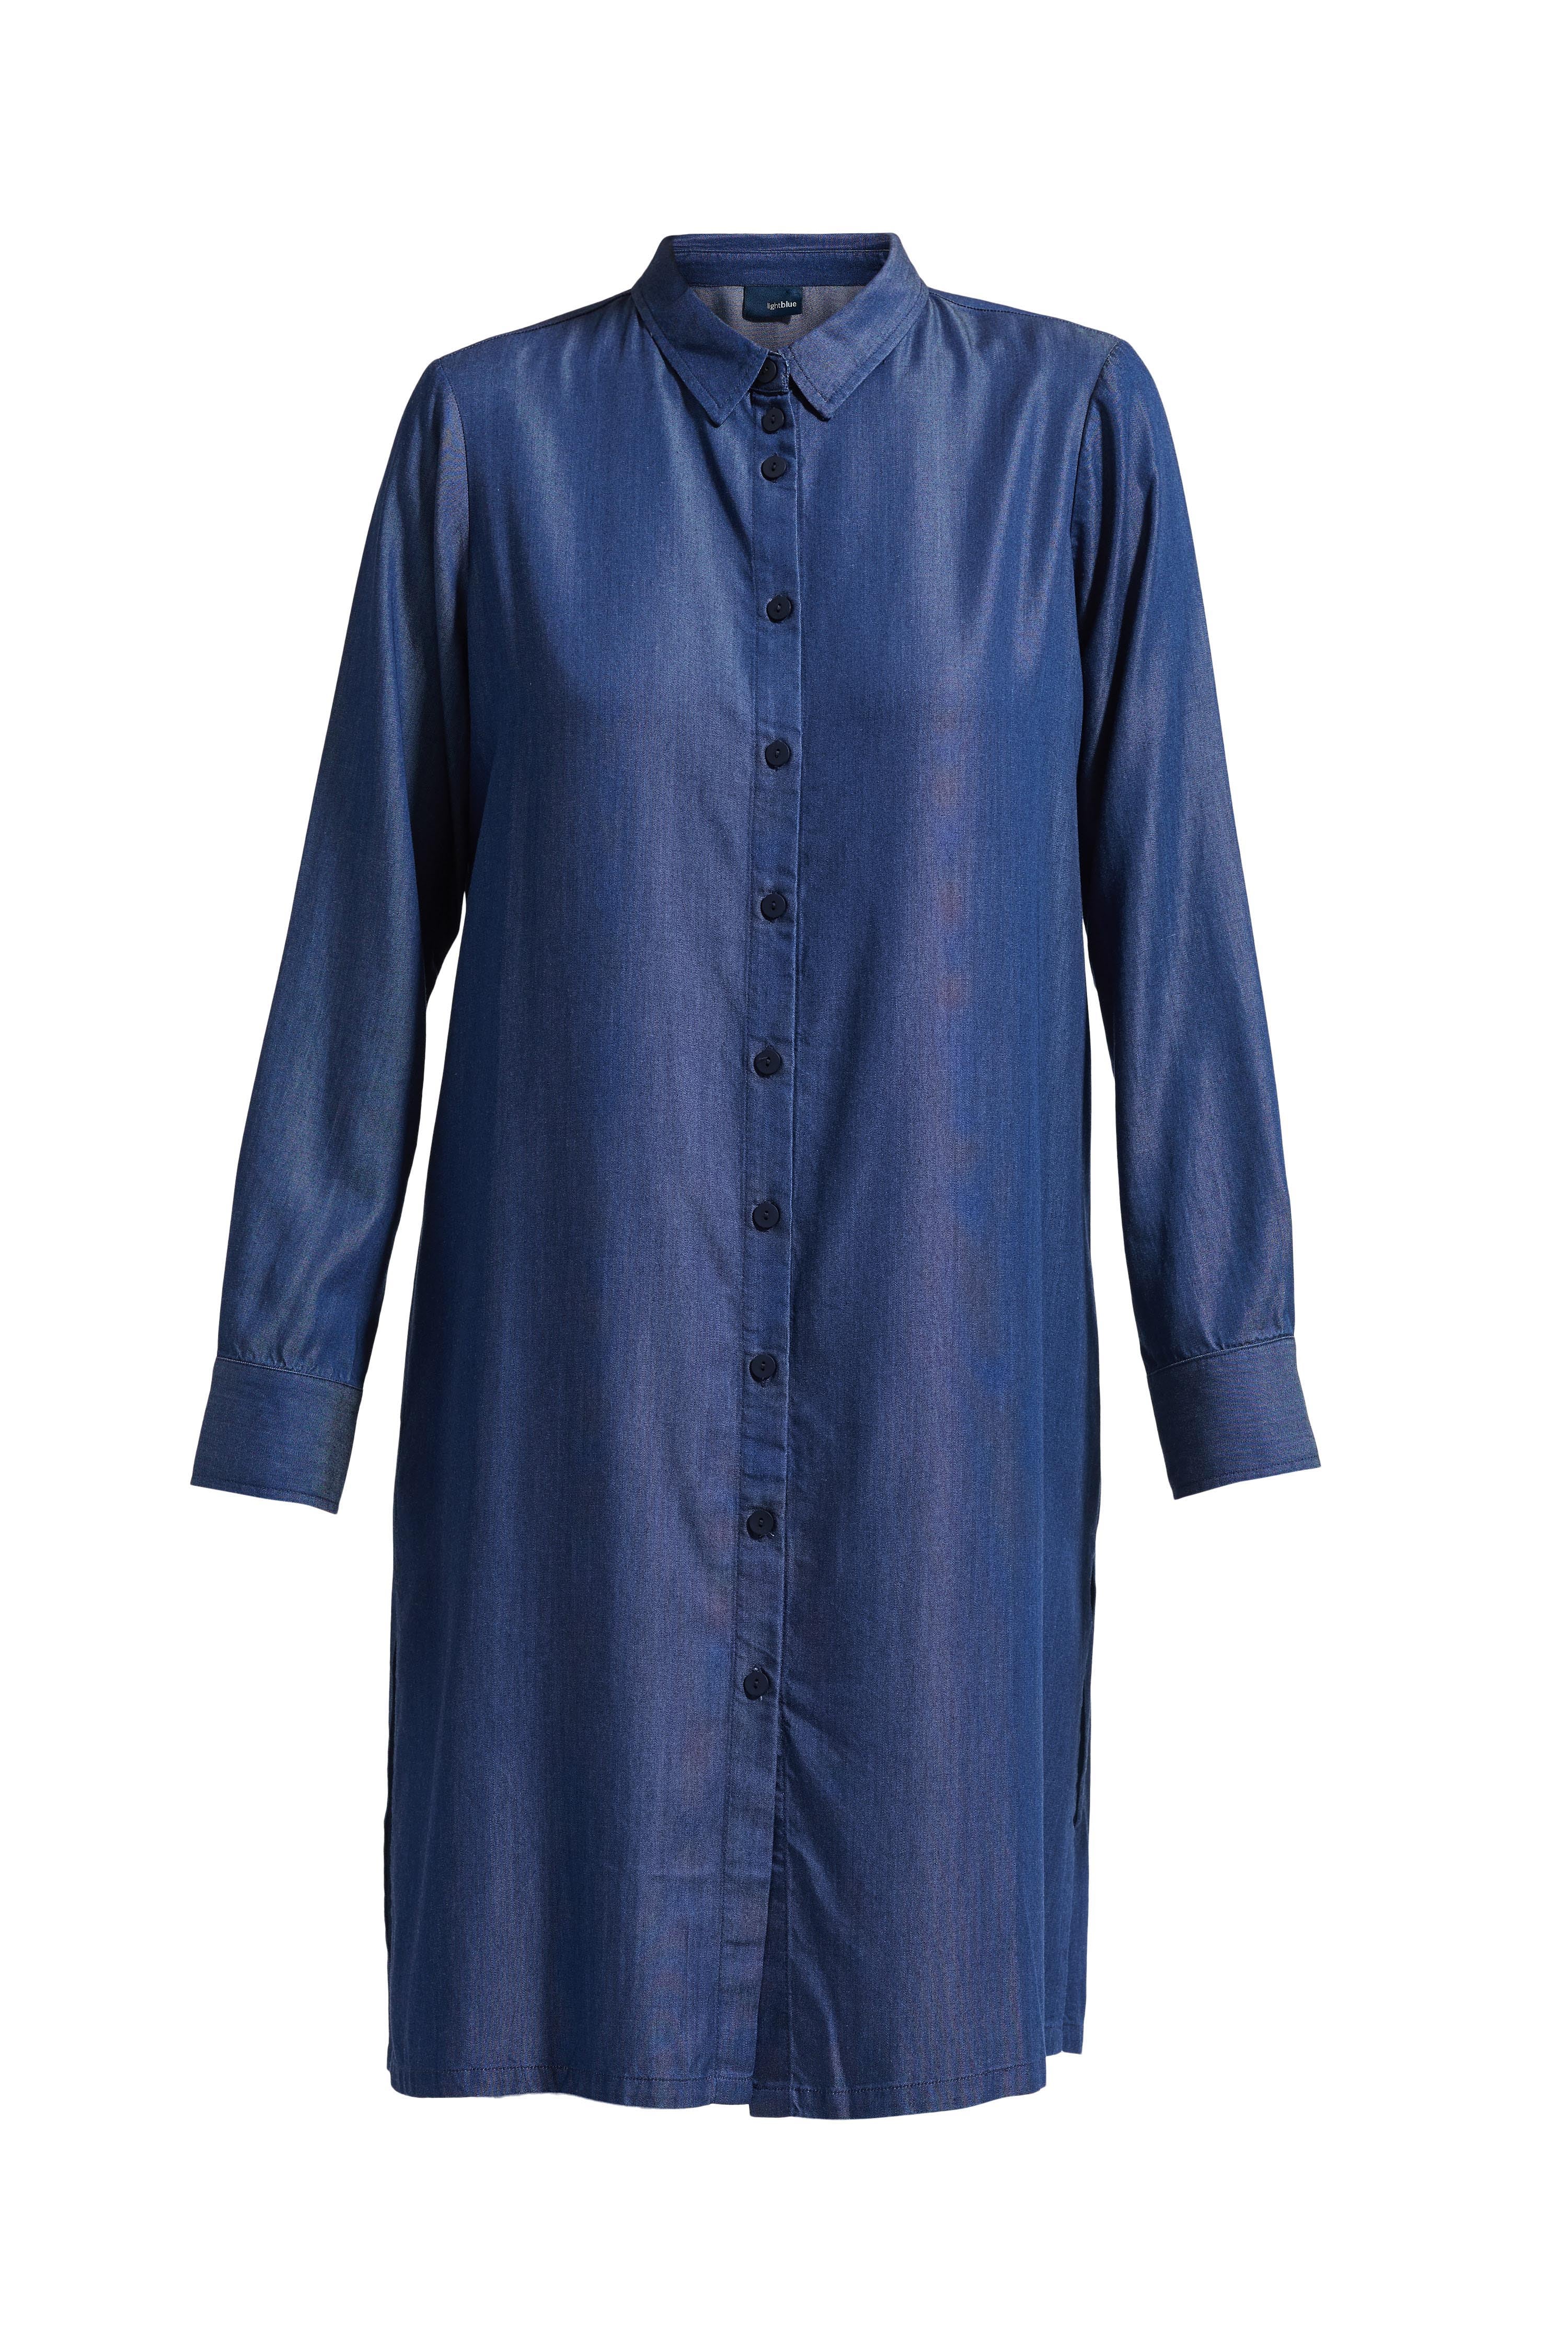 LAURIE  Hayden Regular Shirts 49144 Medium Blue Denim